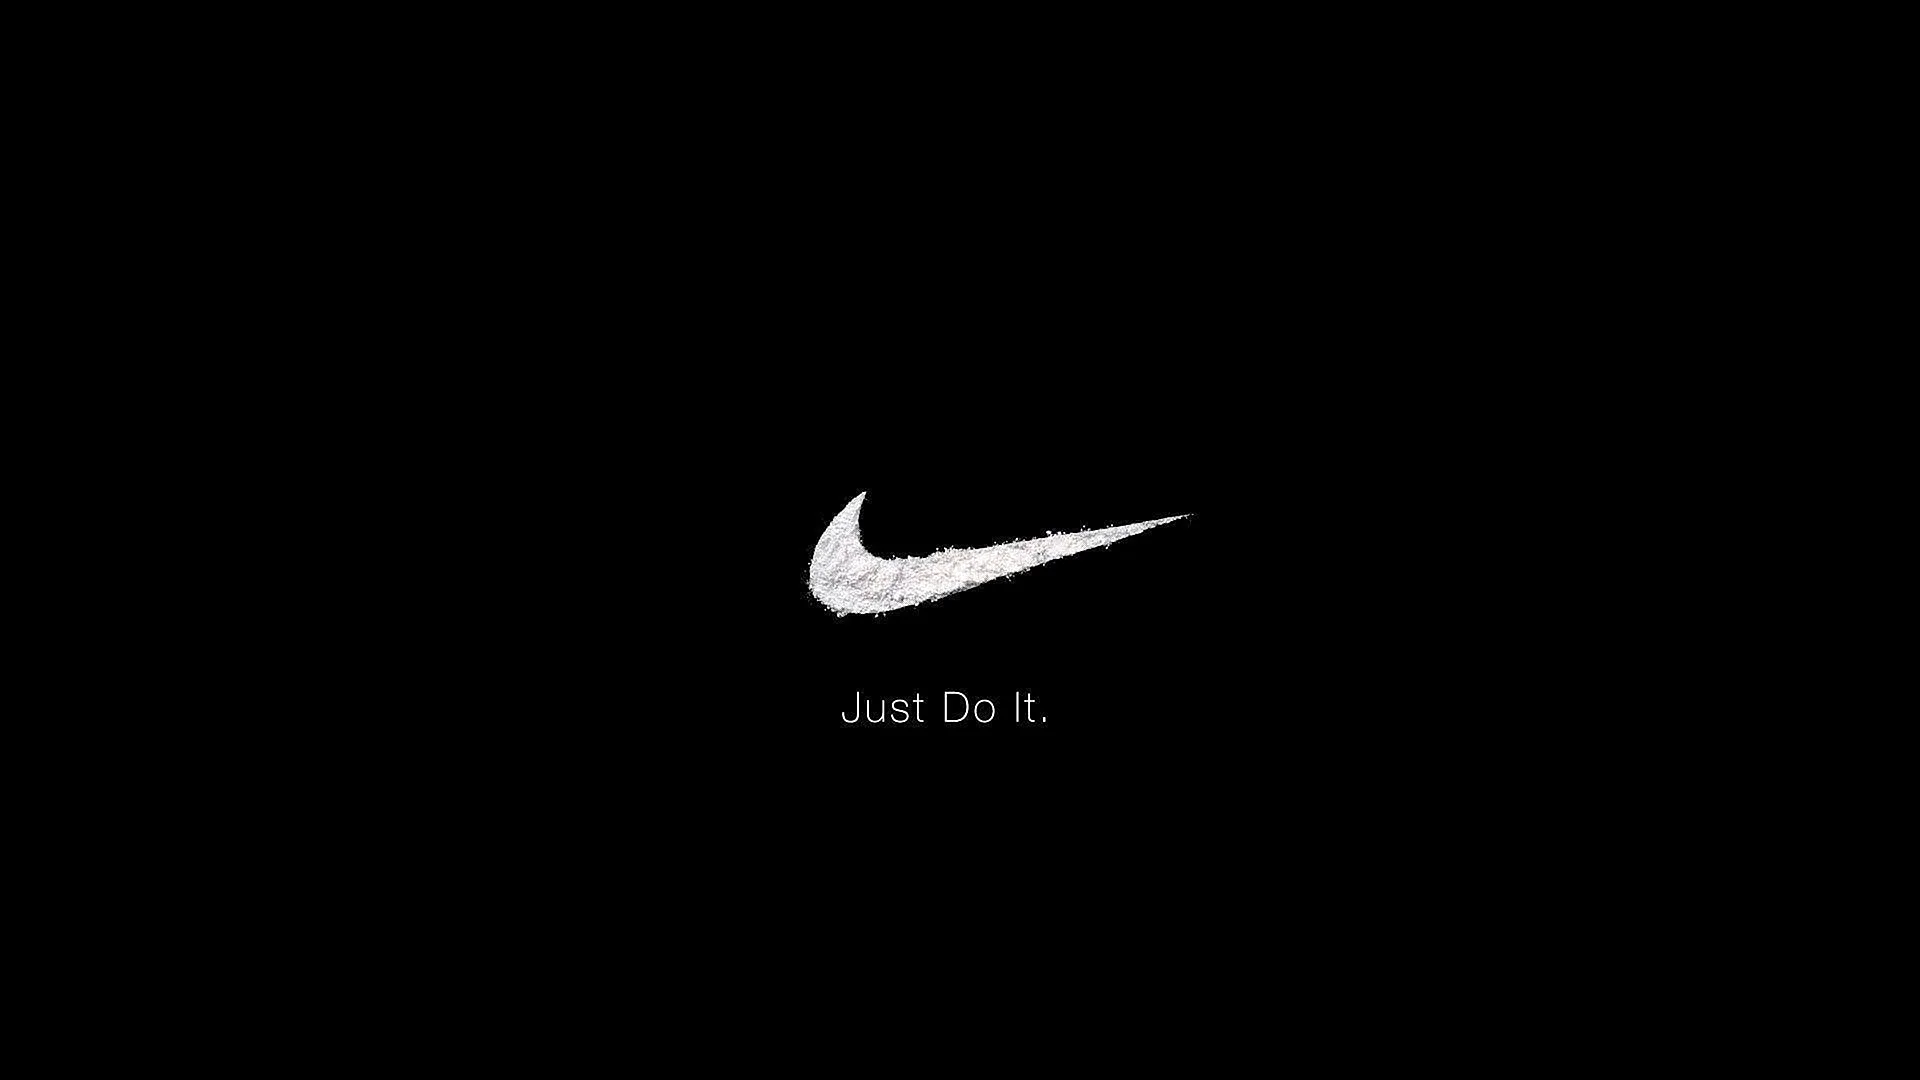 Nike Just Do It Wallpaper